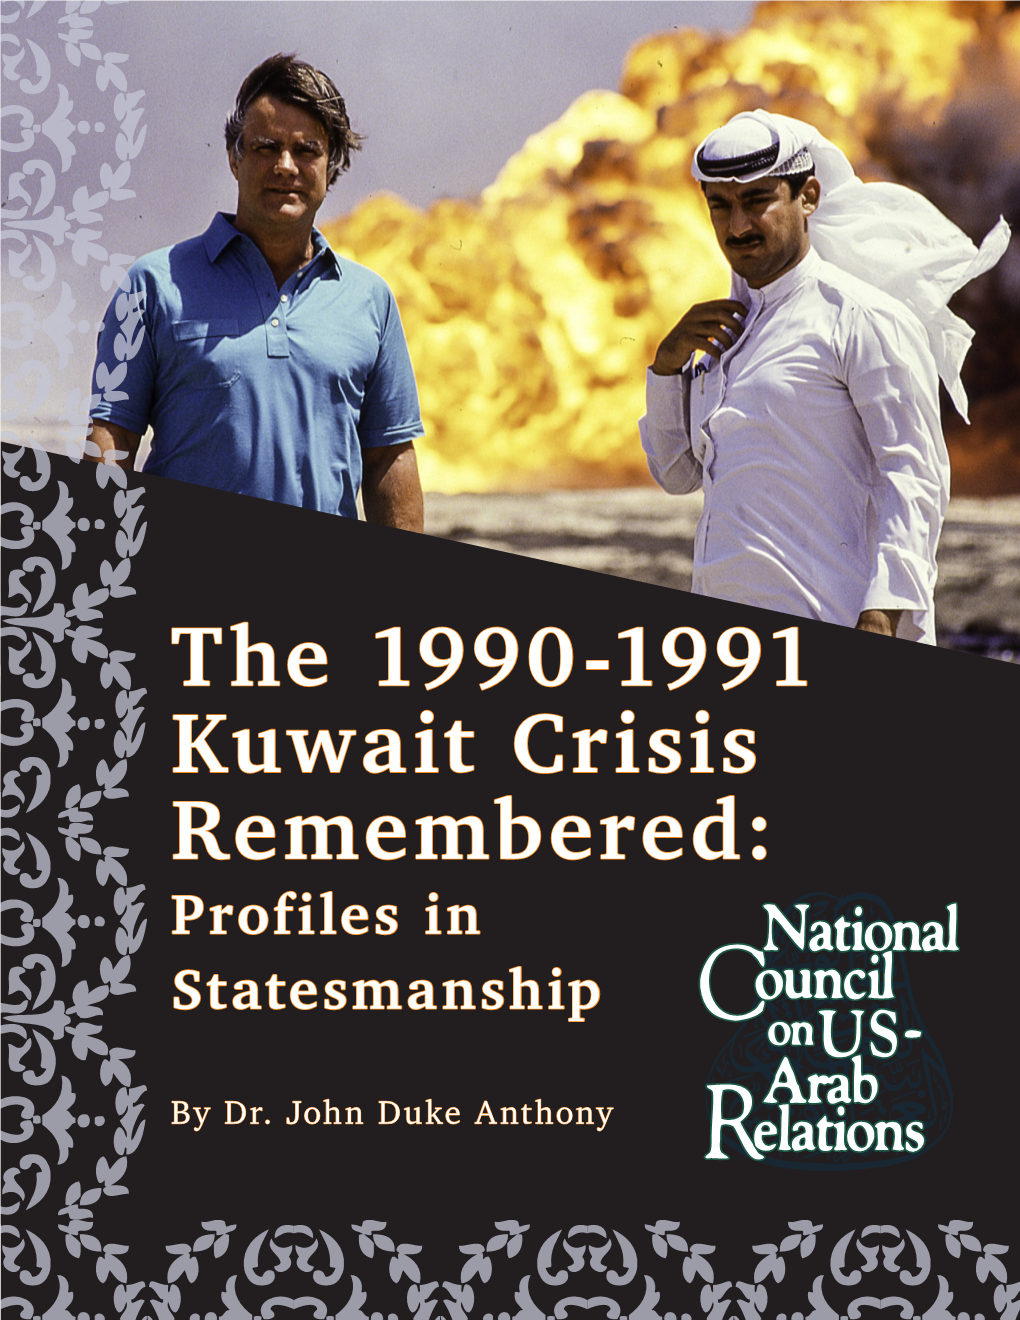 The 1990-1991 Kuwait Crisis Remembered: Profiles in Statesmanship